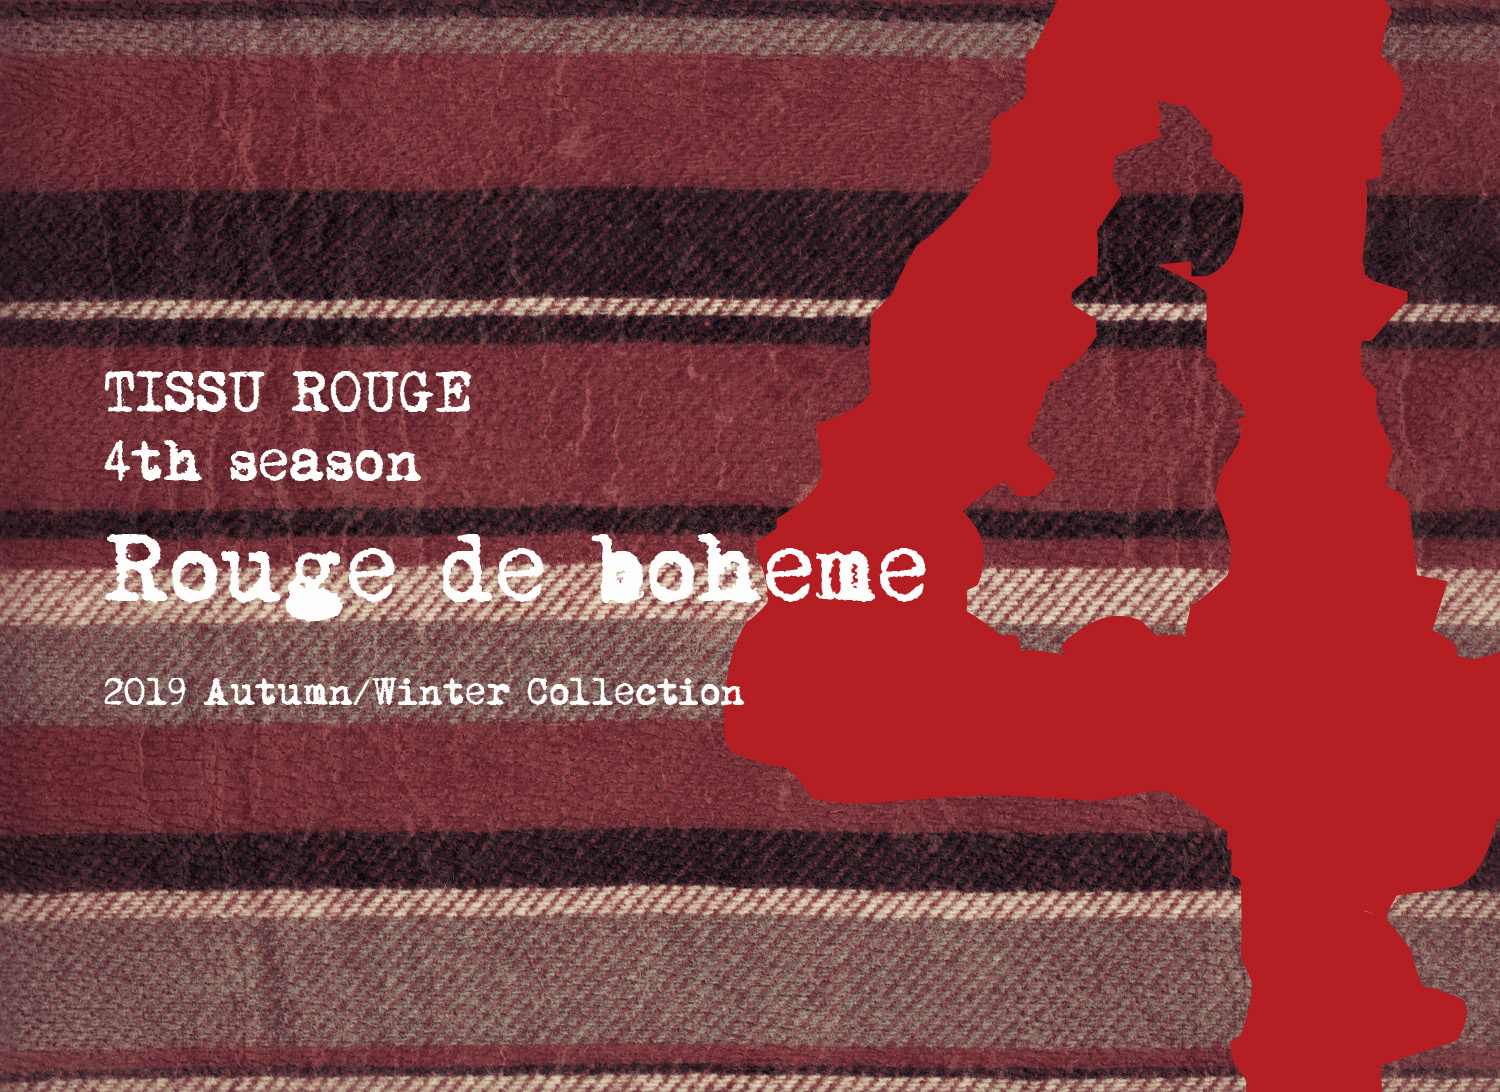 19AW Rouge de Bohême Now Launched!!!